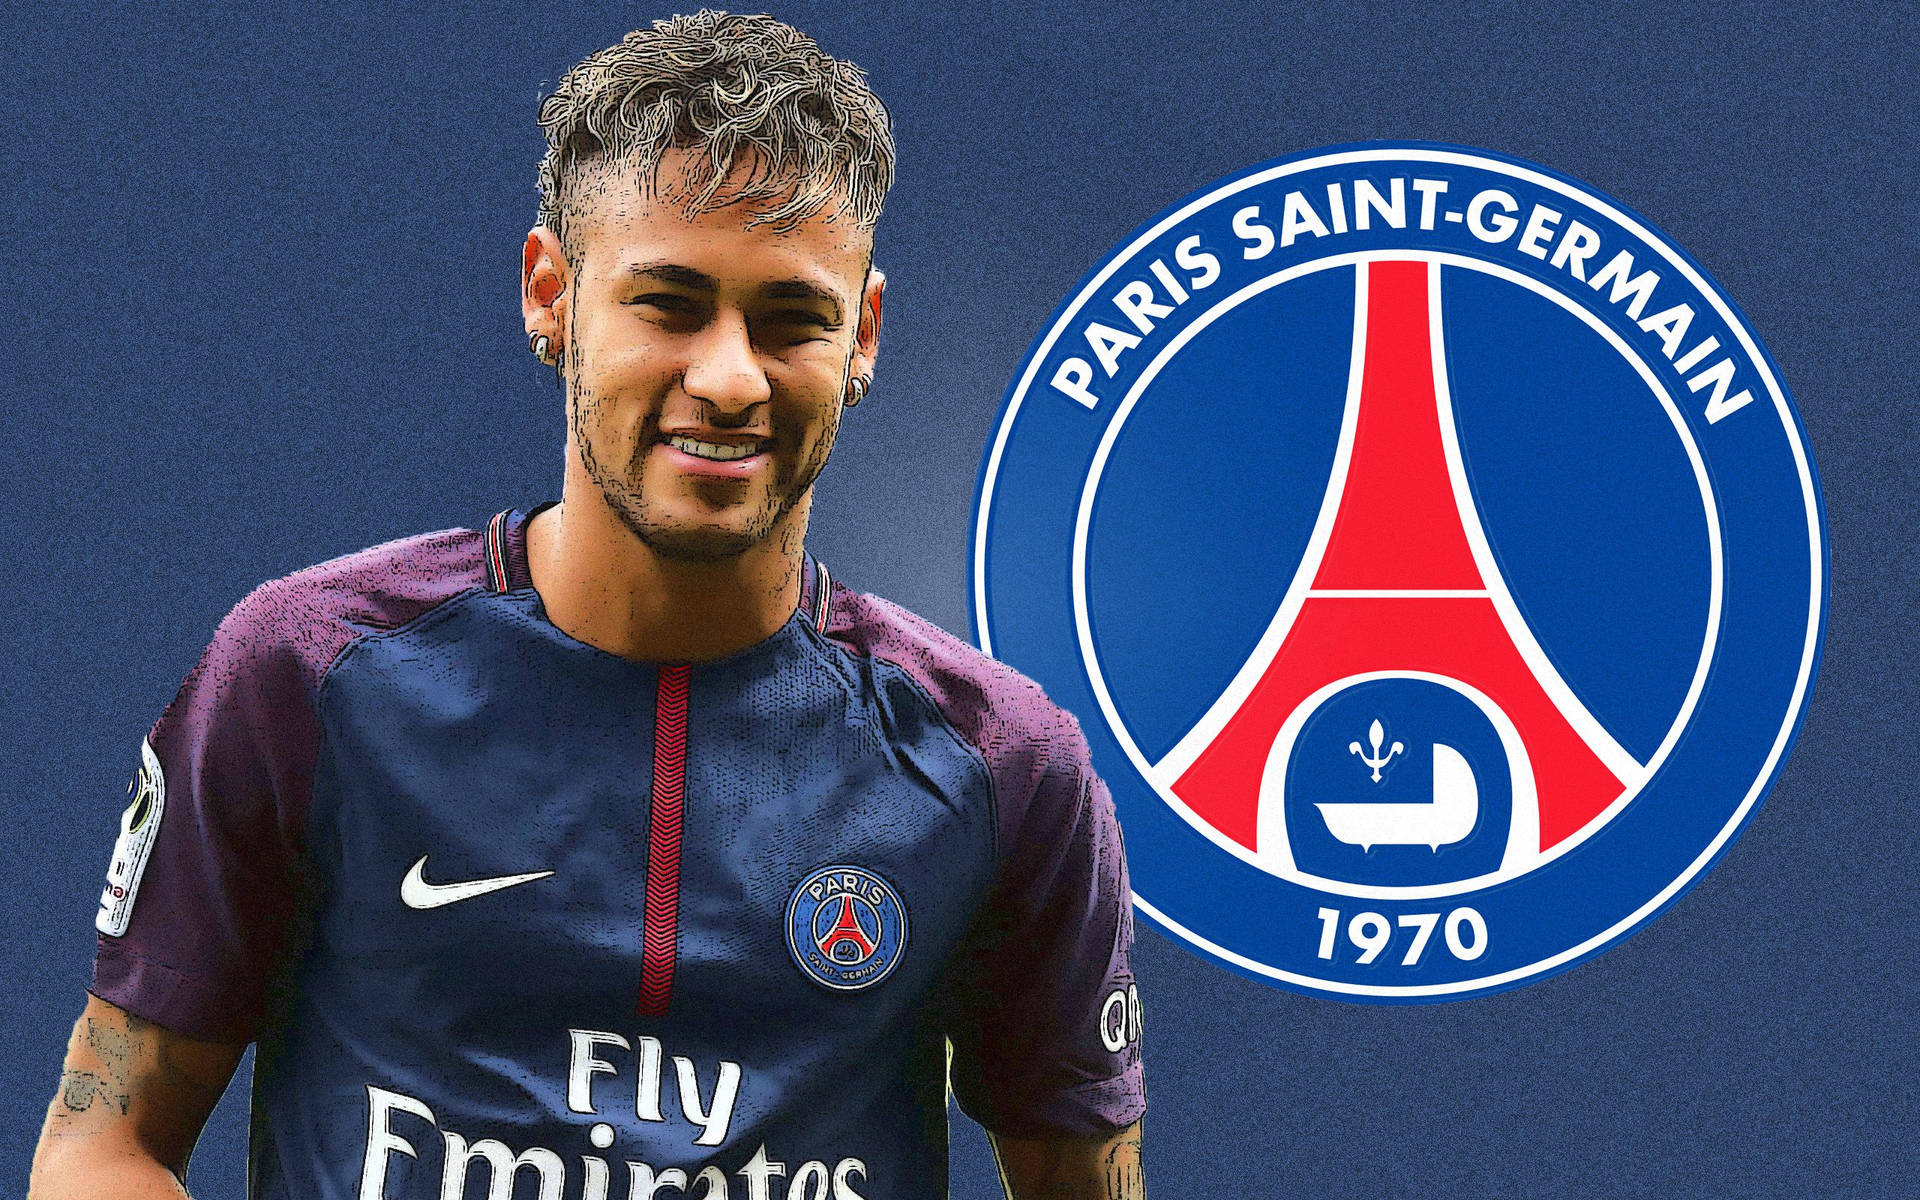 Neymar celebrates with Paris Saint-Germain logo. Wallpaper